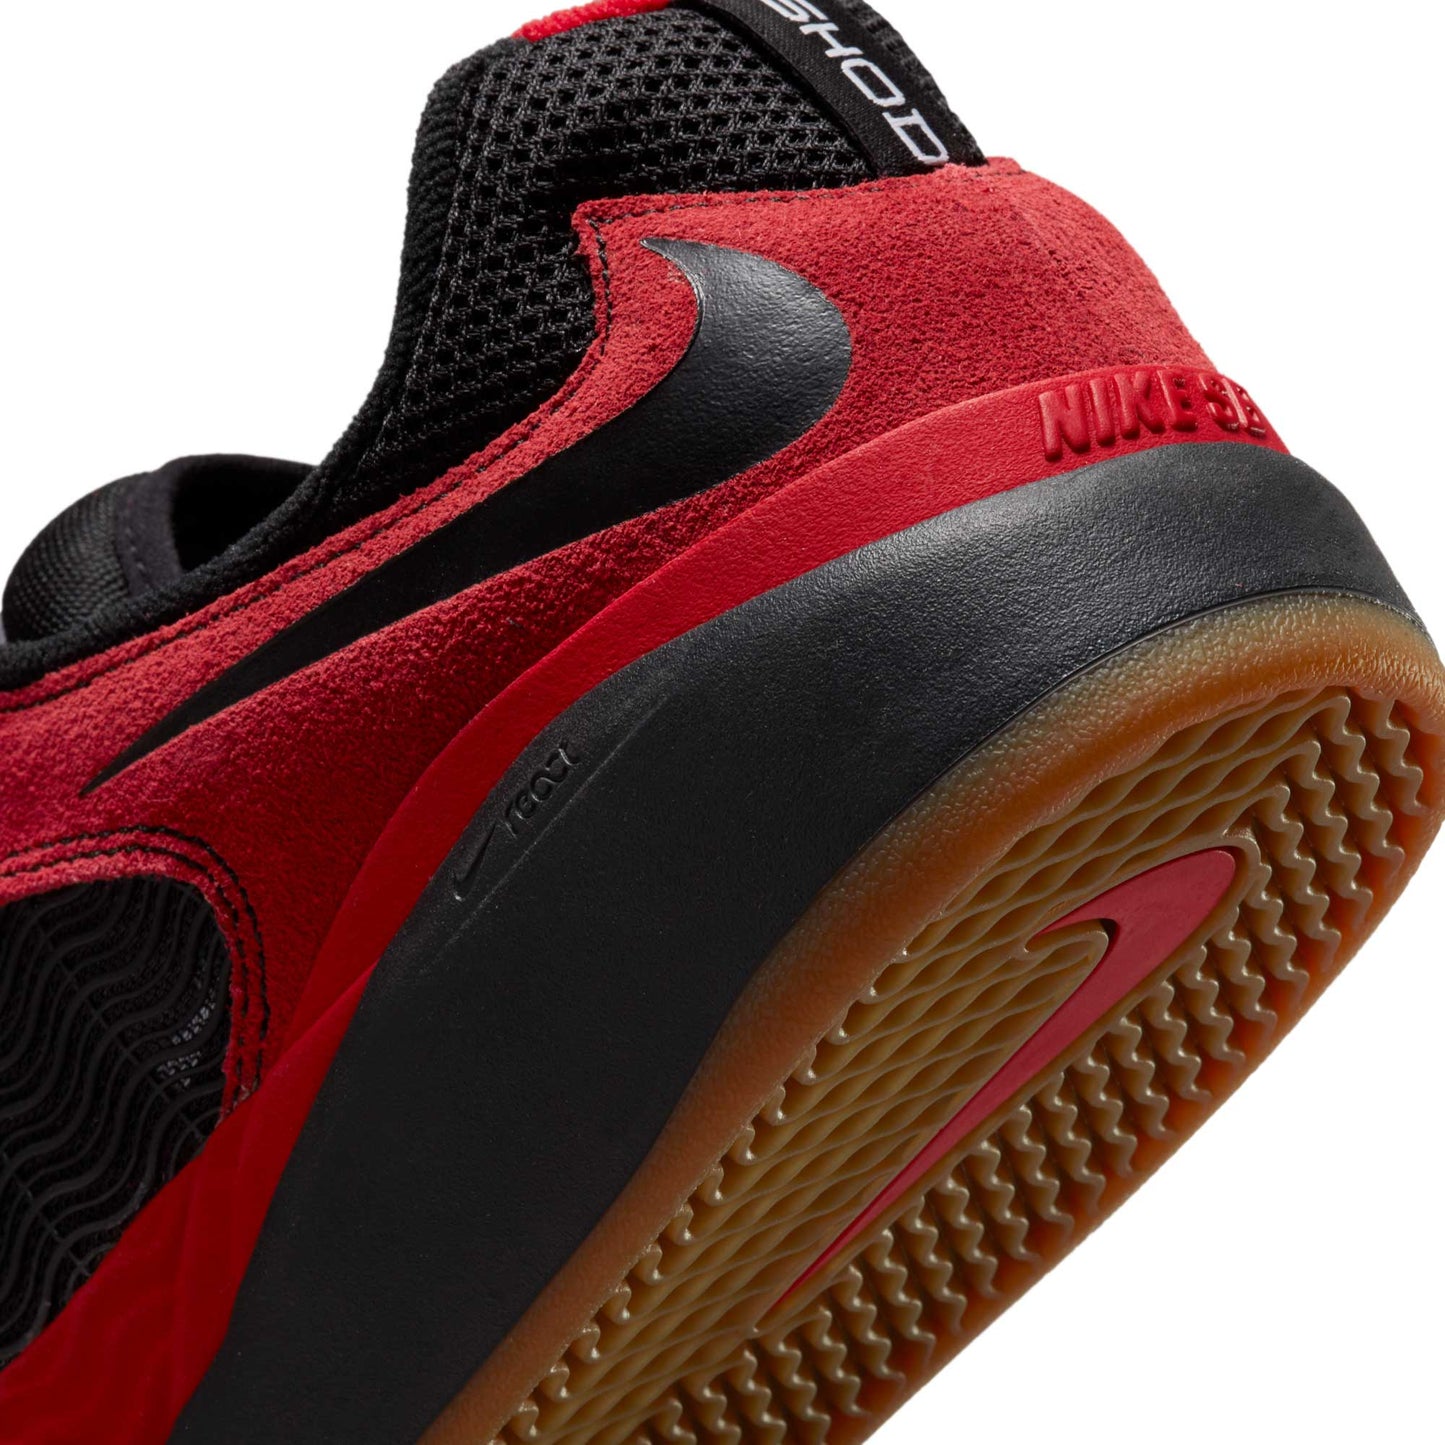 Nike SB Ishod Wair, varsity red/black-varsity red-white - Tiki Room Skateboards - 10